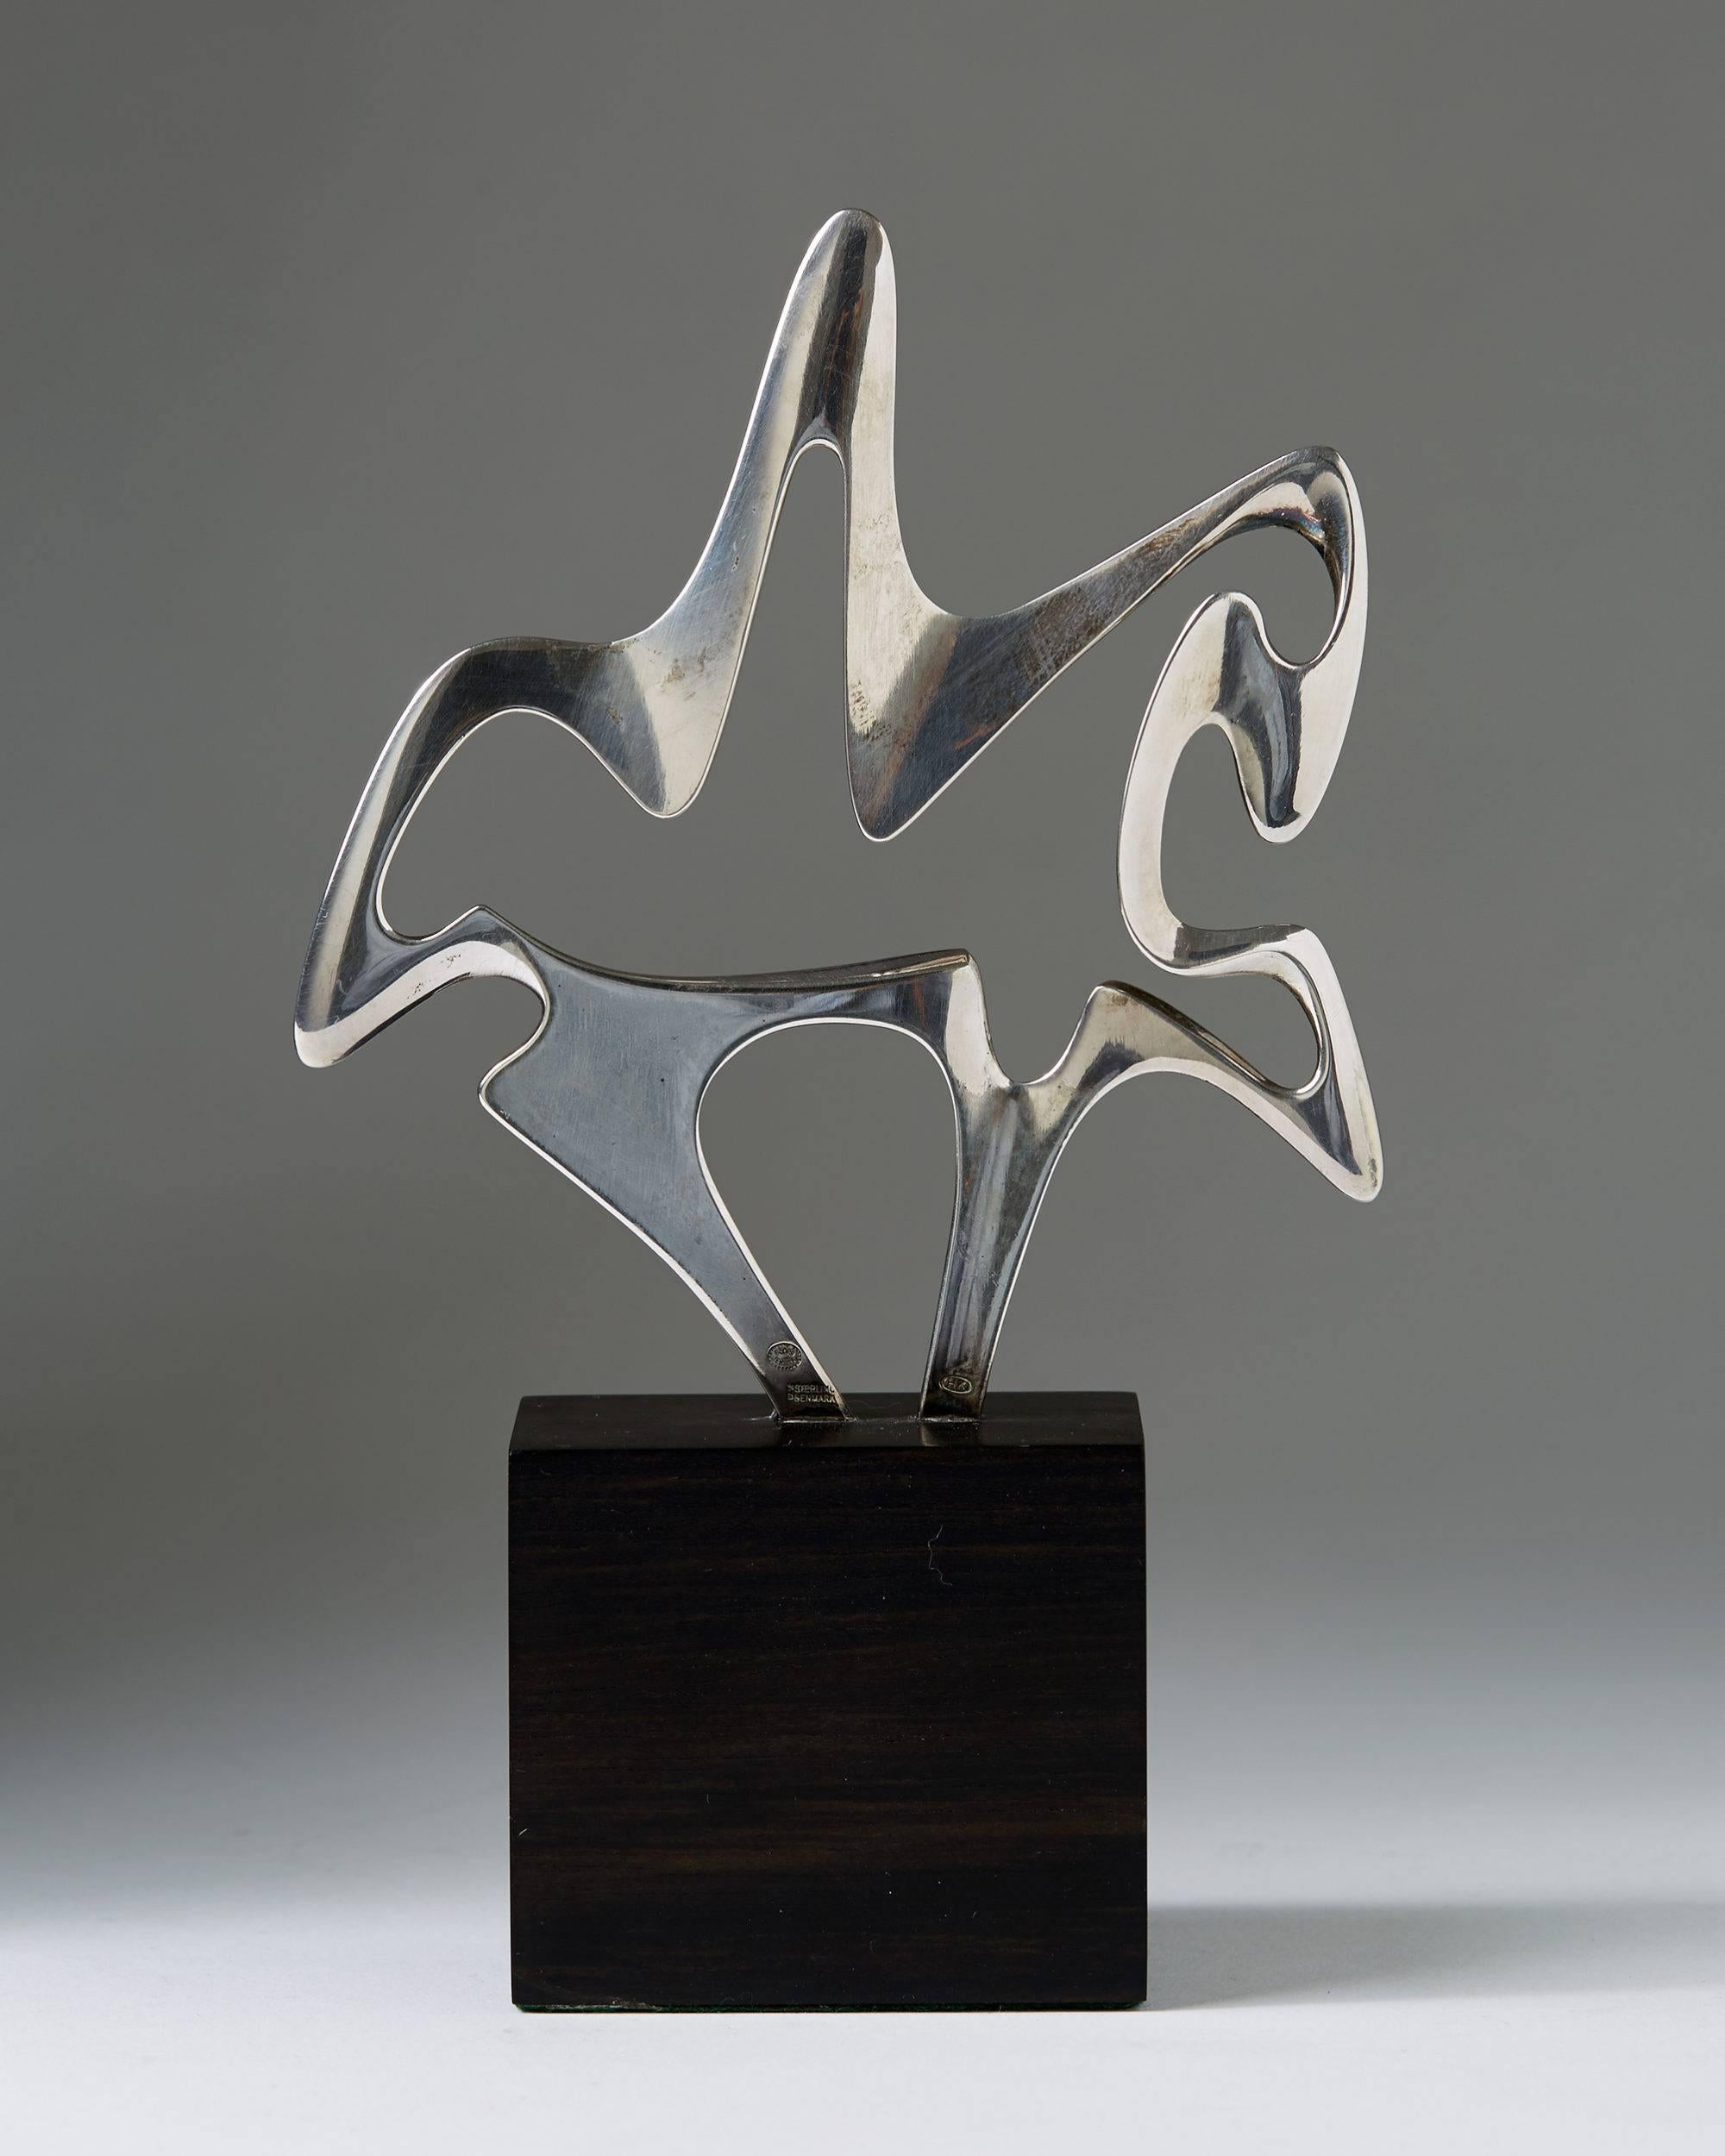 Sculpture designed by Henning Koppel for Georg Jensen, Denmark, 1970s.
Sterling silver and ebony.
Dimensions:
H 16 cm/ 6 1/4